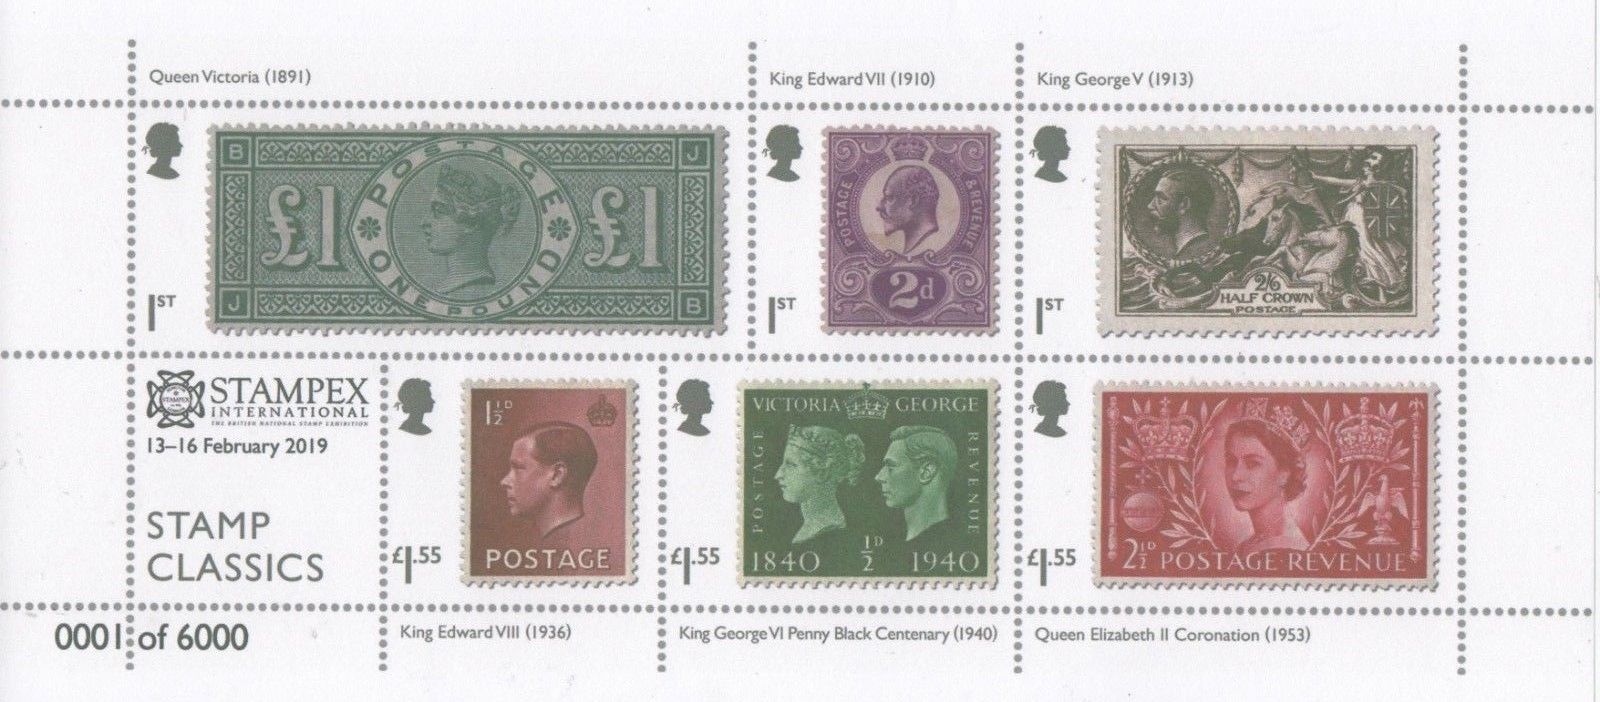 2019 GB - MS4169 - Stamp Classics MS Stampex Overprint MNH